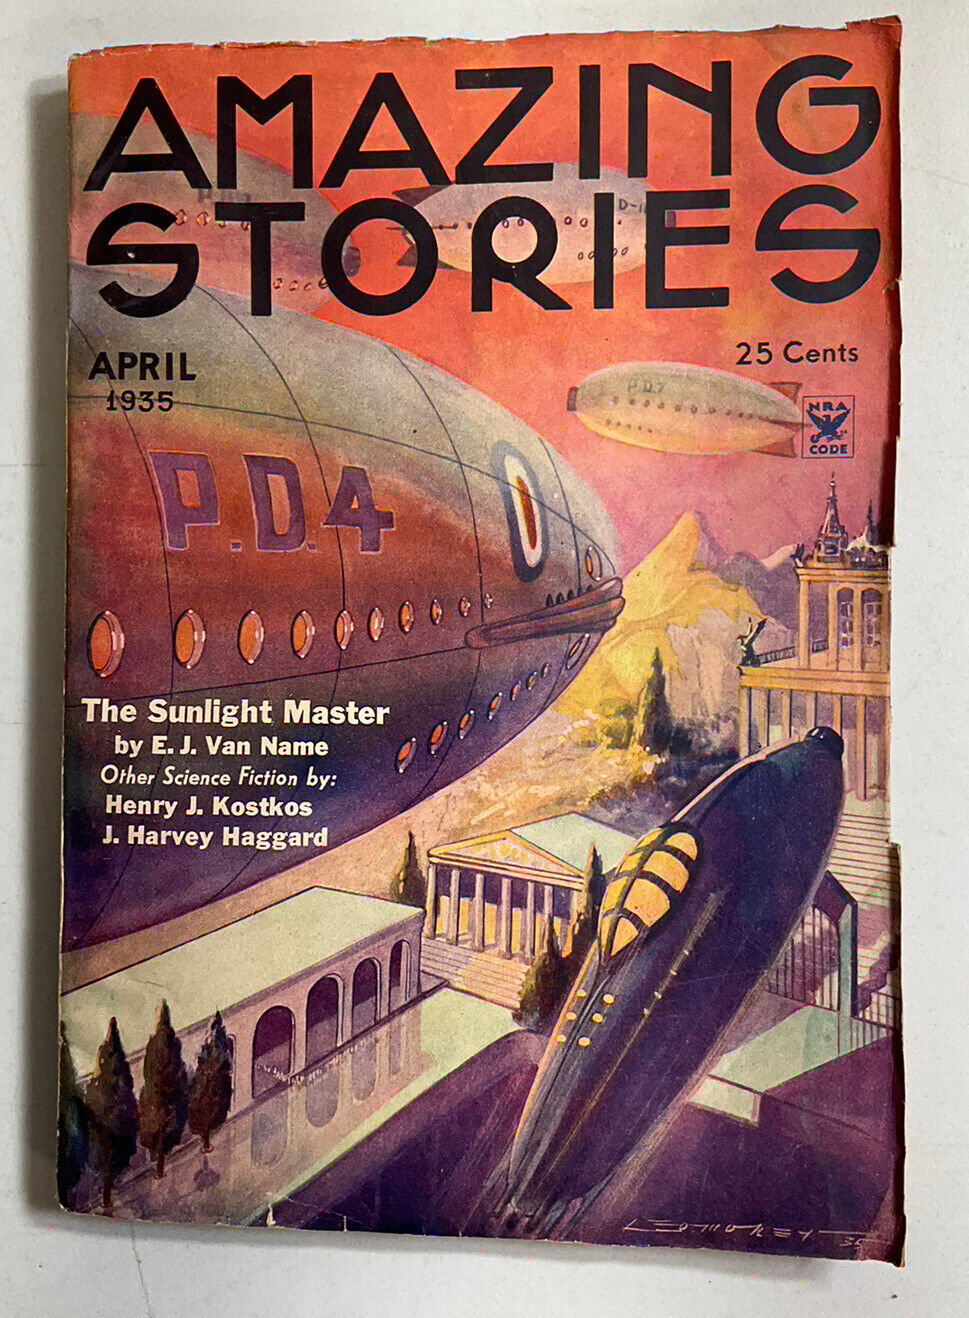 Amazing Stories 1935 April. Pulp Zeppelin cover.